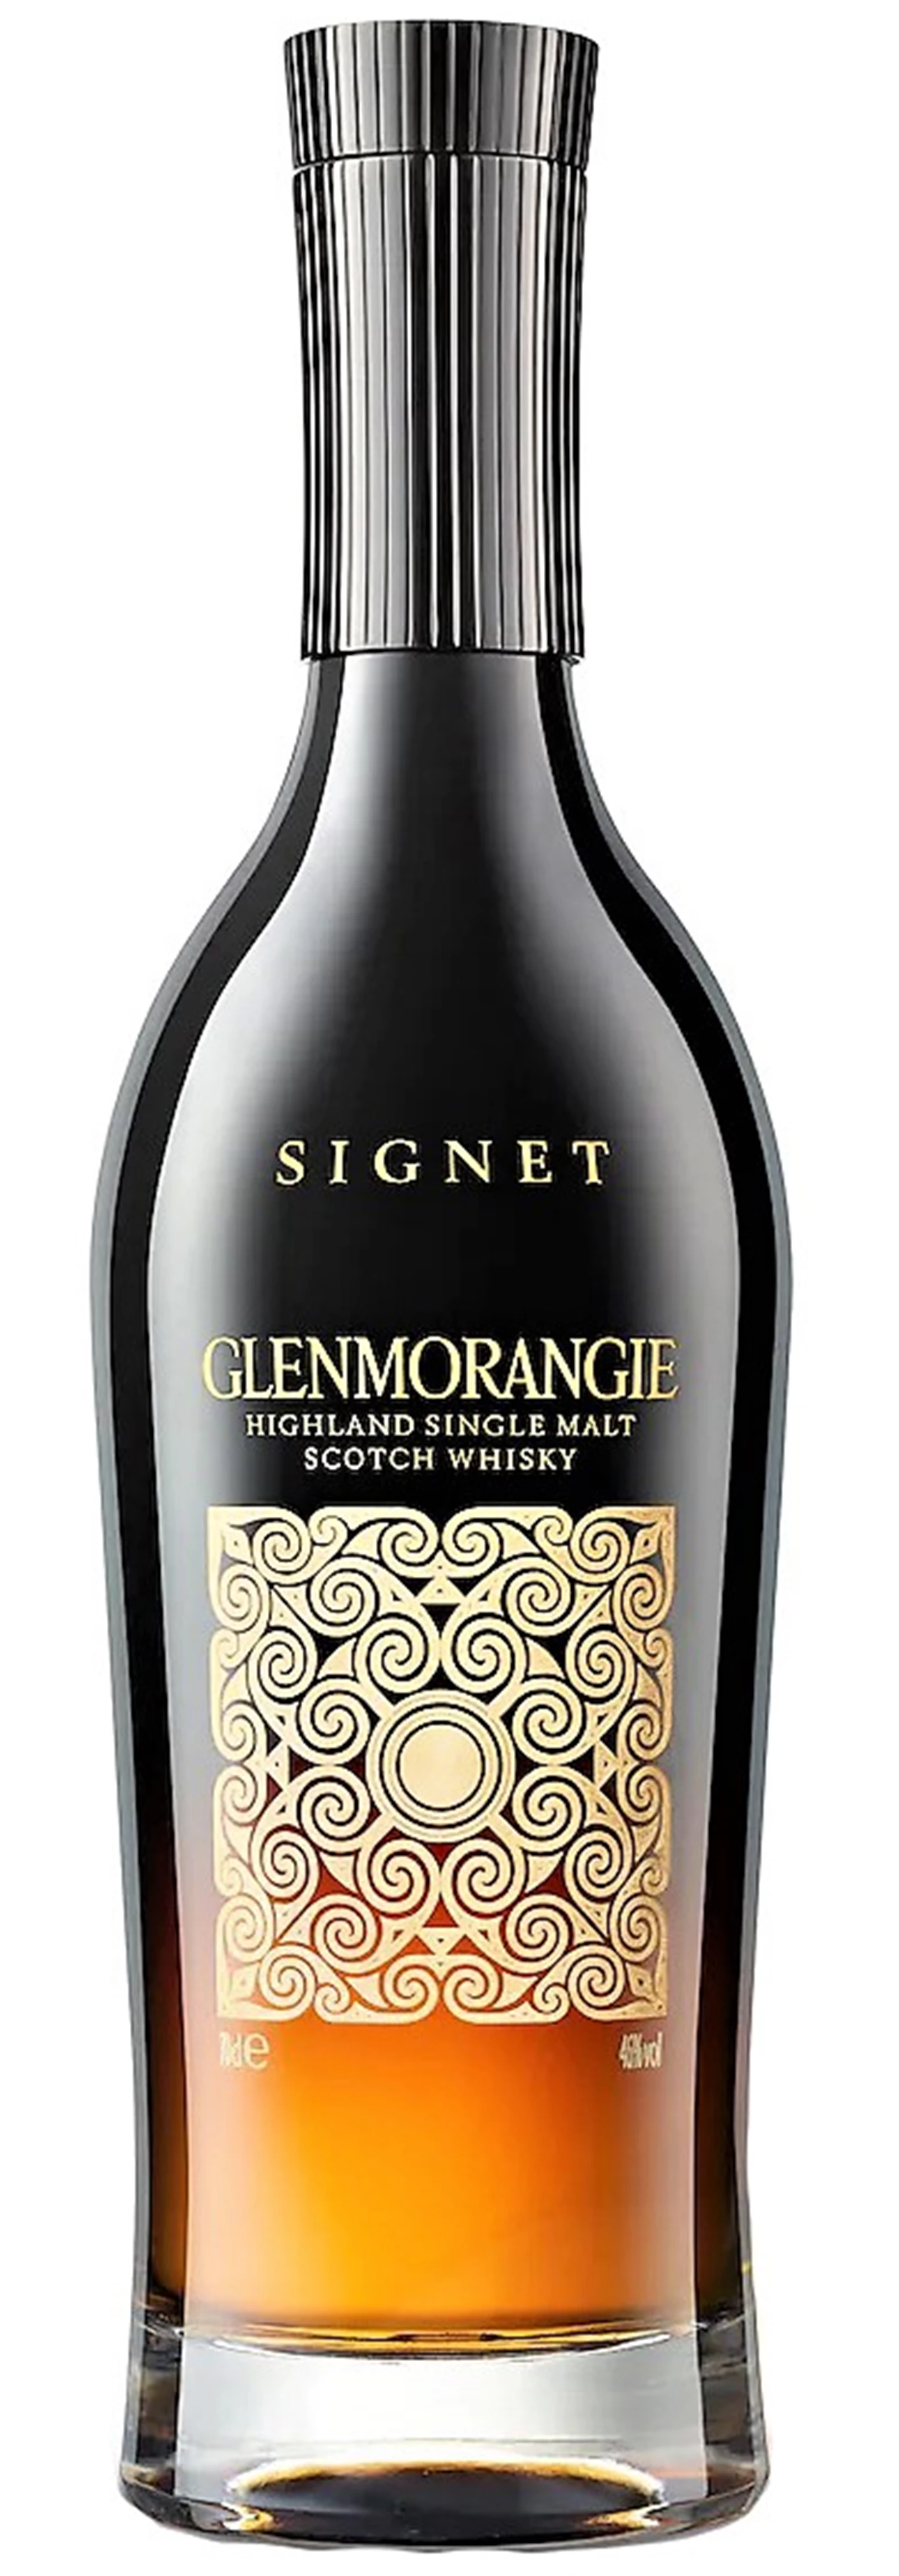 Glenmorangie_Signet-Highland-single-malt